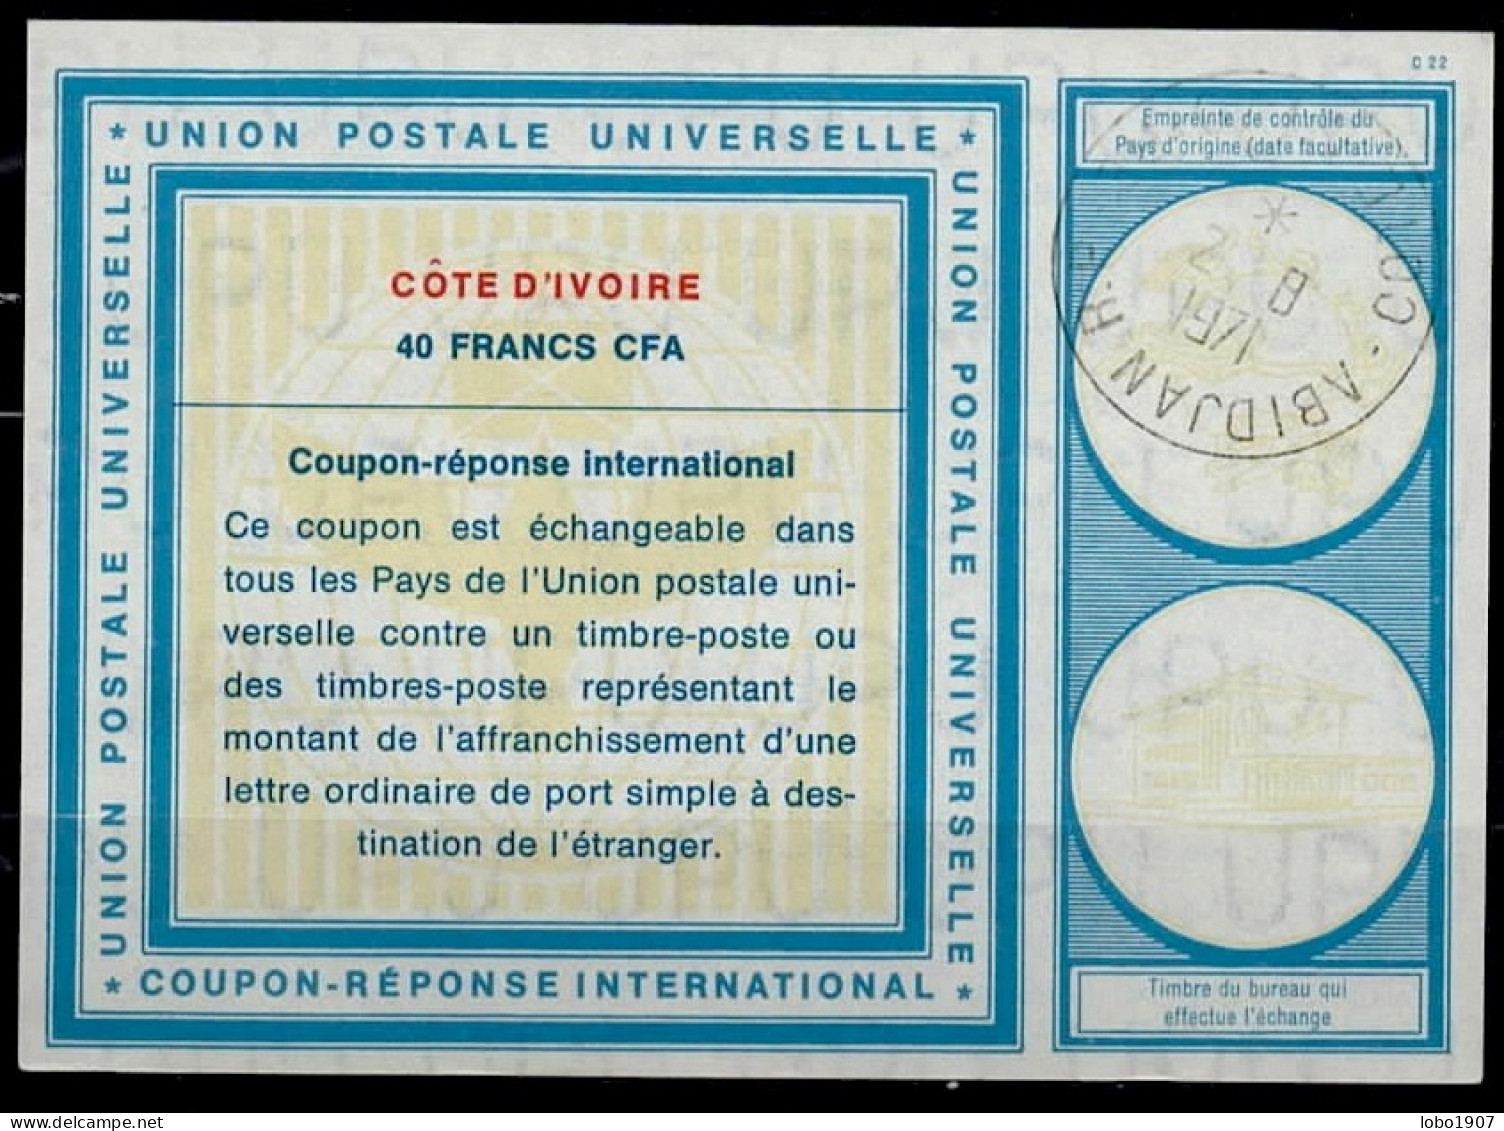 CÔTE D'IVOIRE IVORY COAST Vi19  40 FRANCS CFA  International Reply Coupon Reponse Antwortschein IRC IAS ABIDJAN 02.08.71 - Ivoorkust (1960-...)